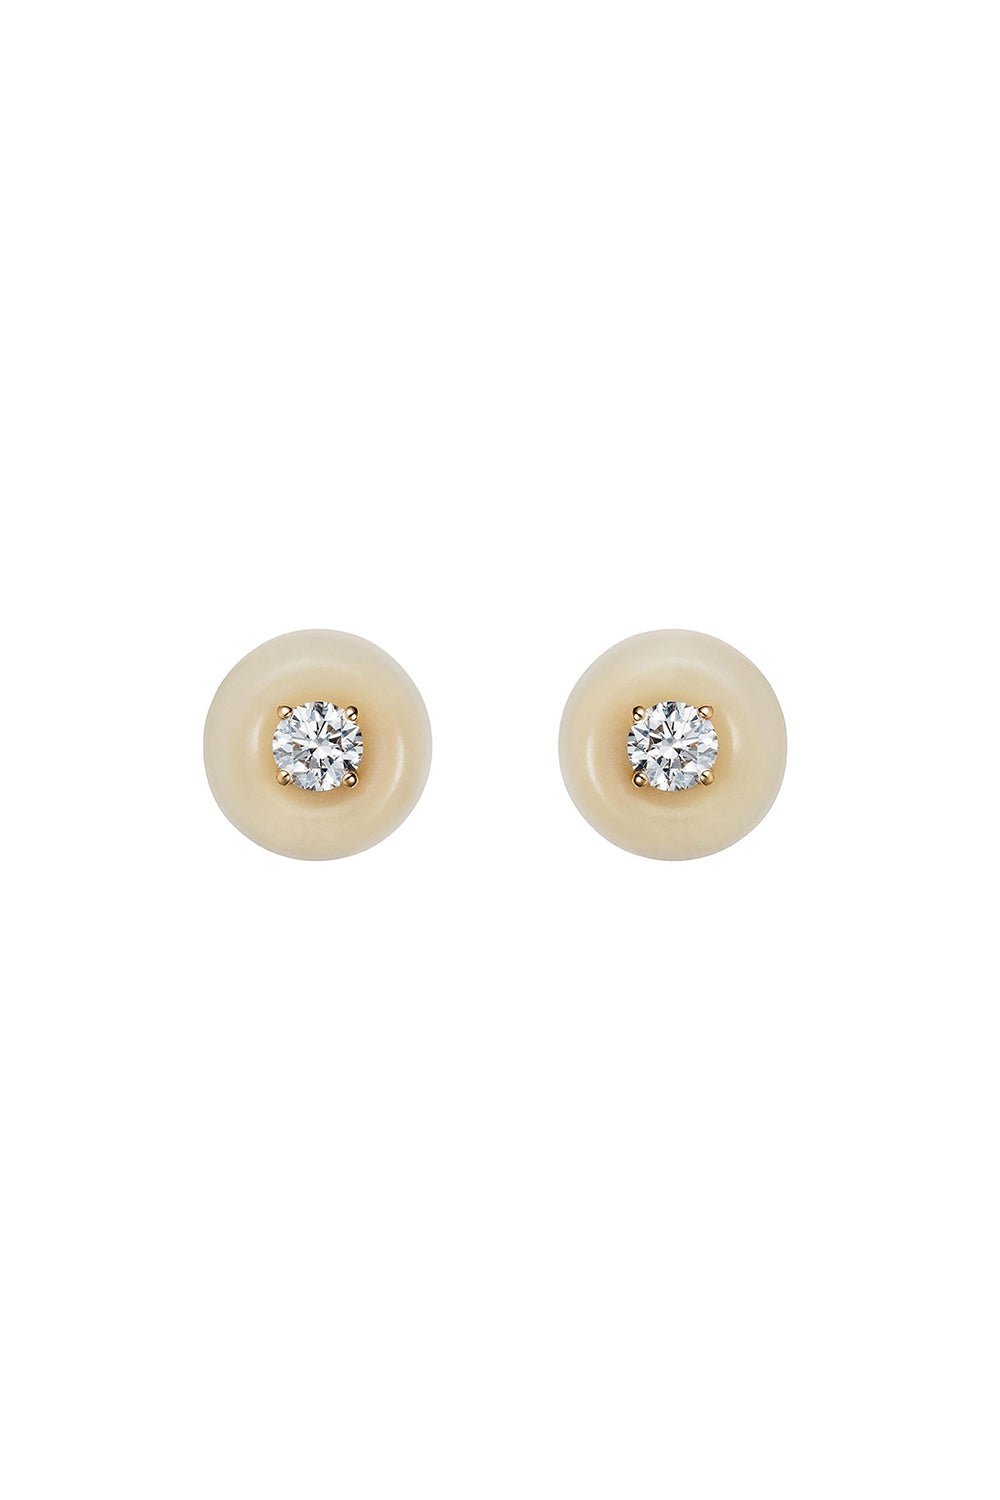 FERNANDO JORGE-Large Tagua Seed Orbit Stud Earrings-YELLOW GOLD